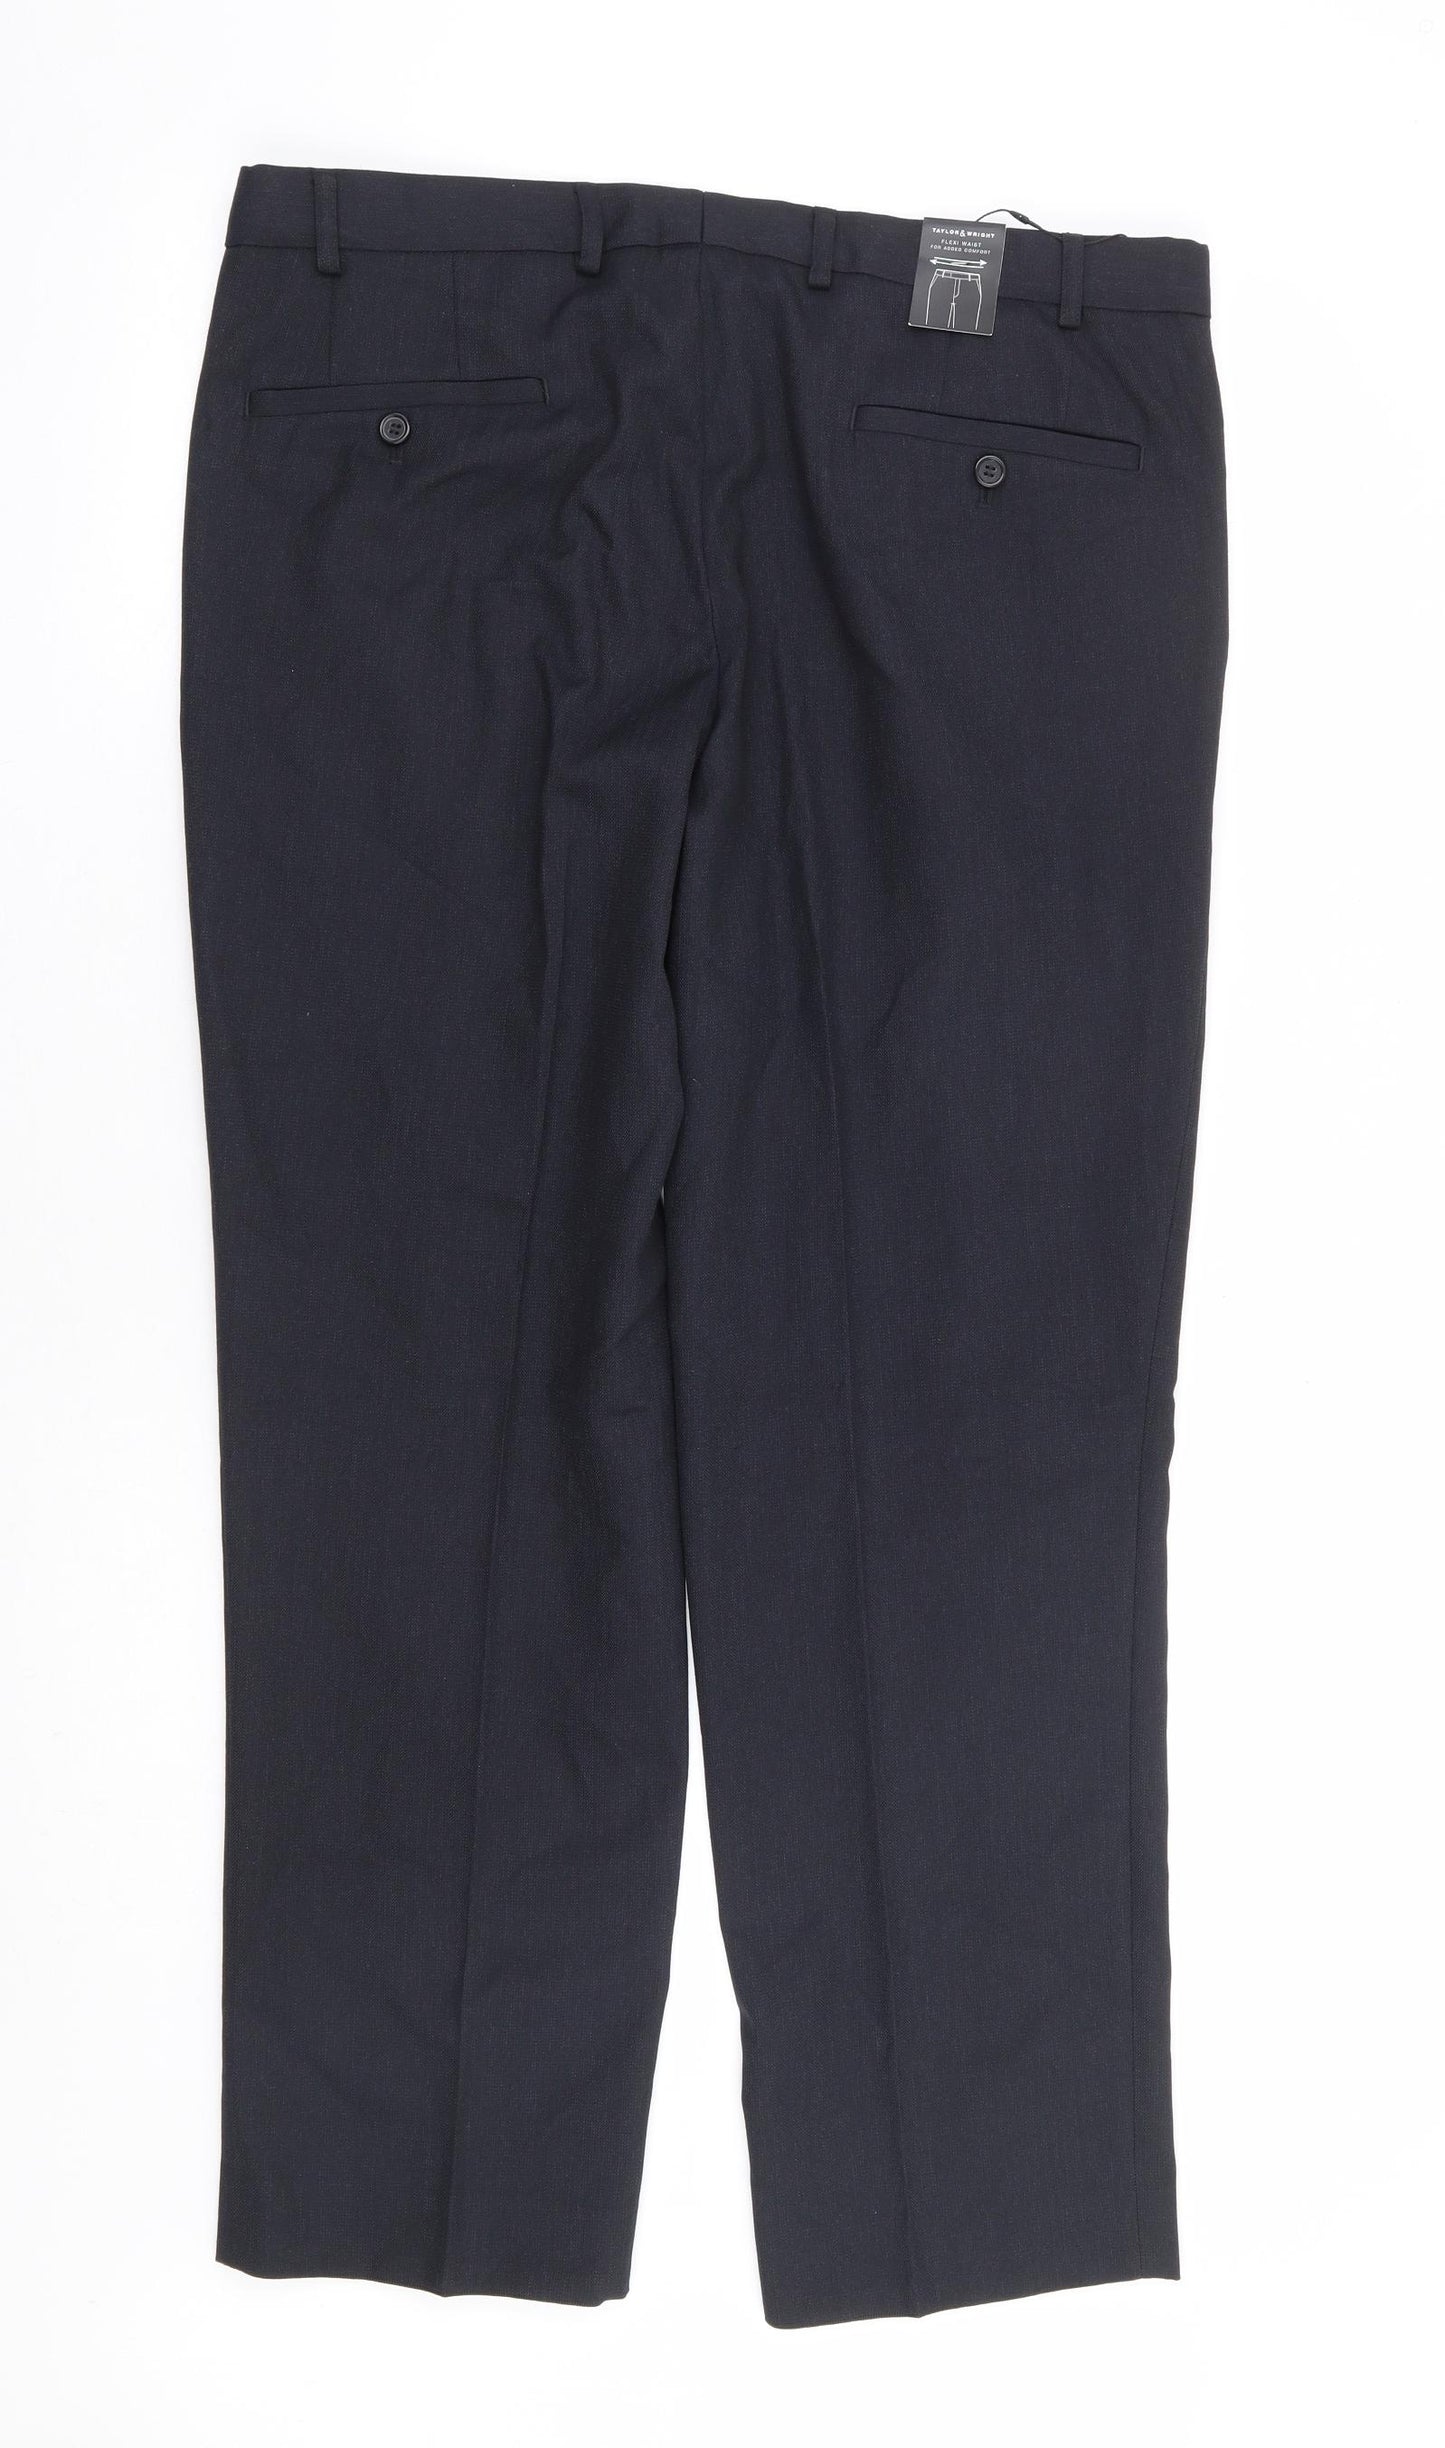 Matalan Mens Grey Polyester Trousers Size 36 in L30 in Regular Zip - Short Length